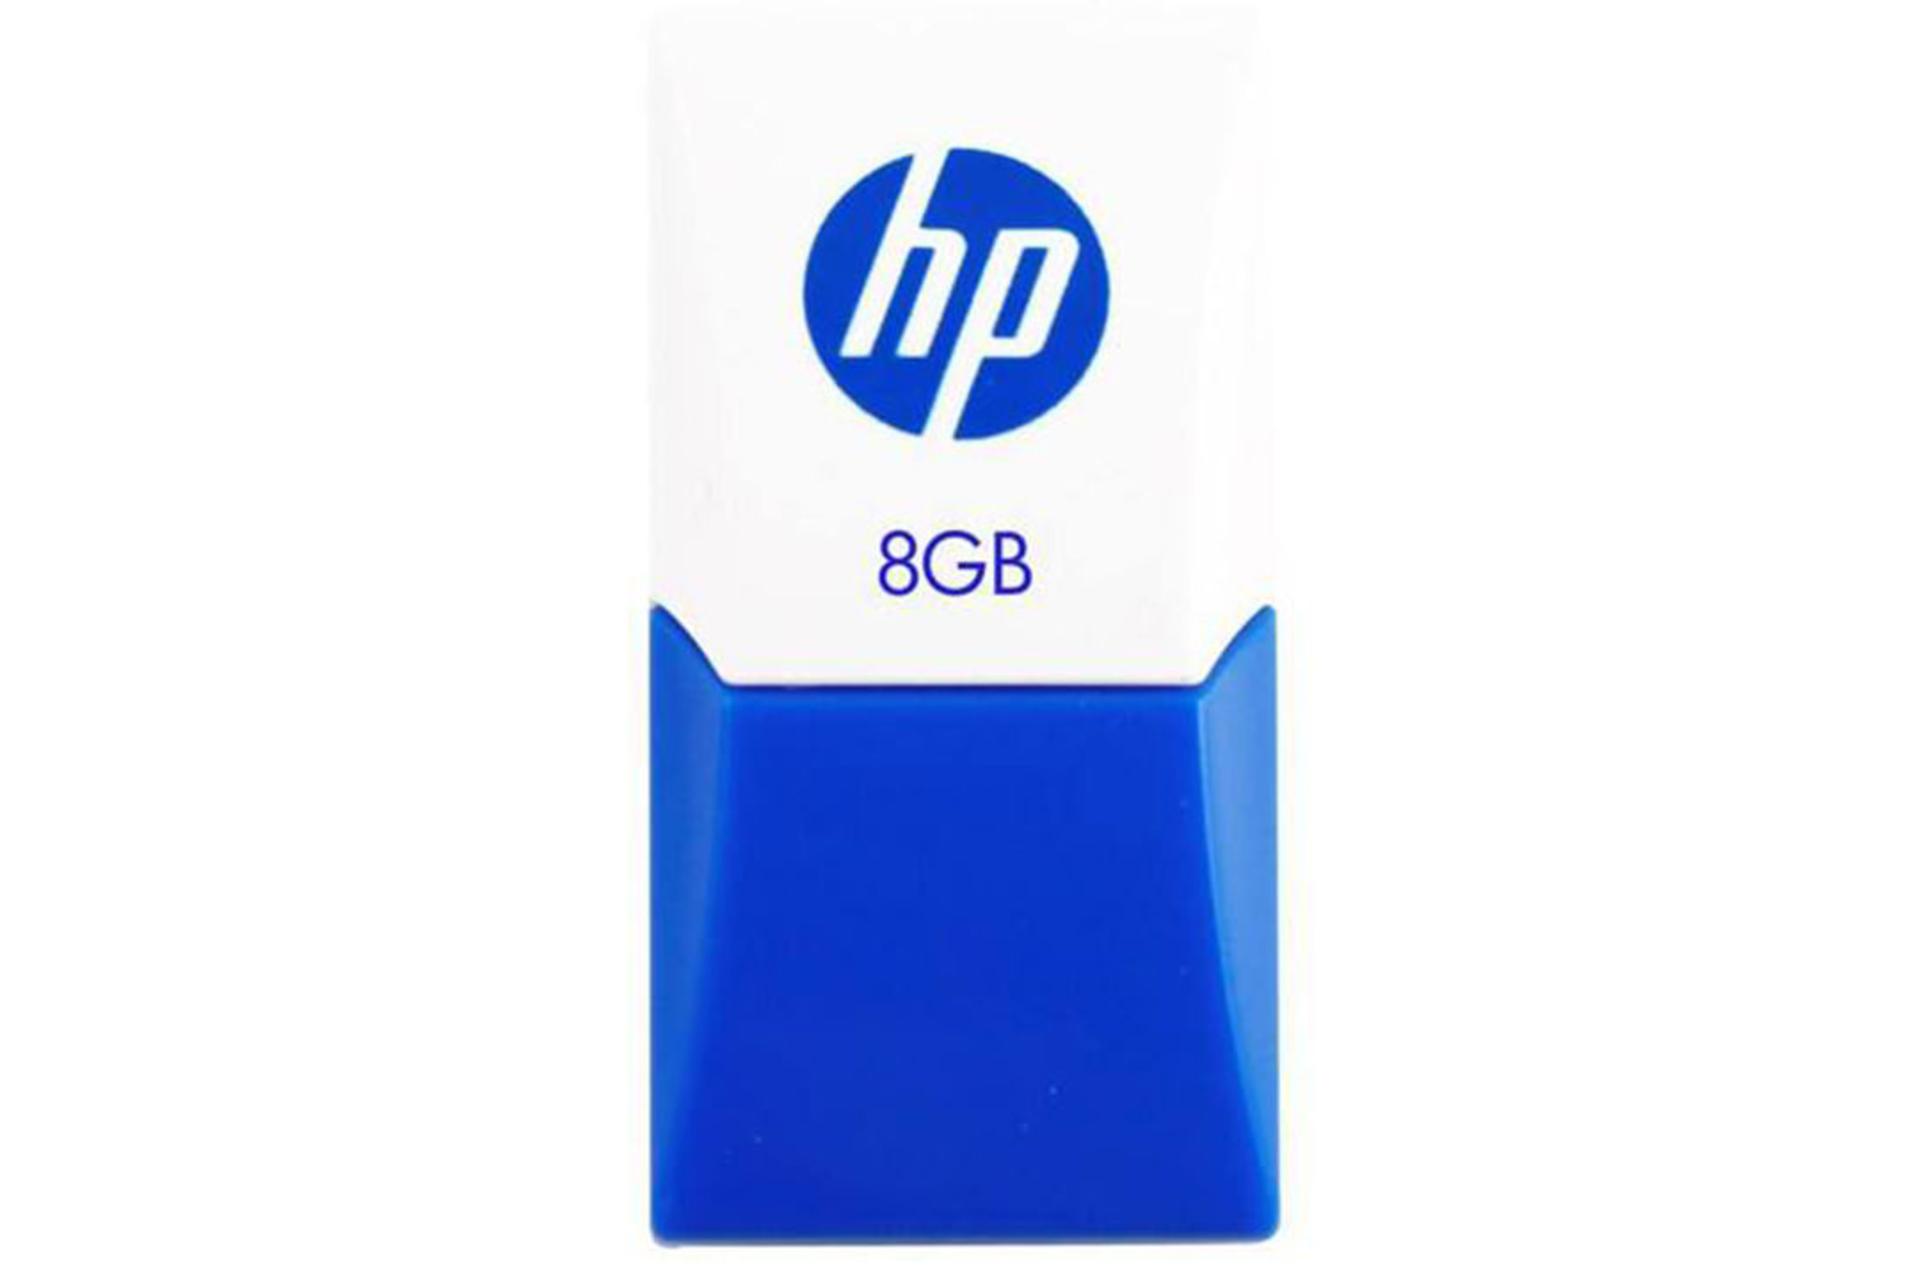 HP v160 8GB